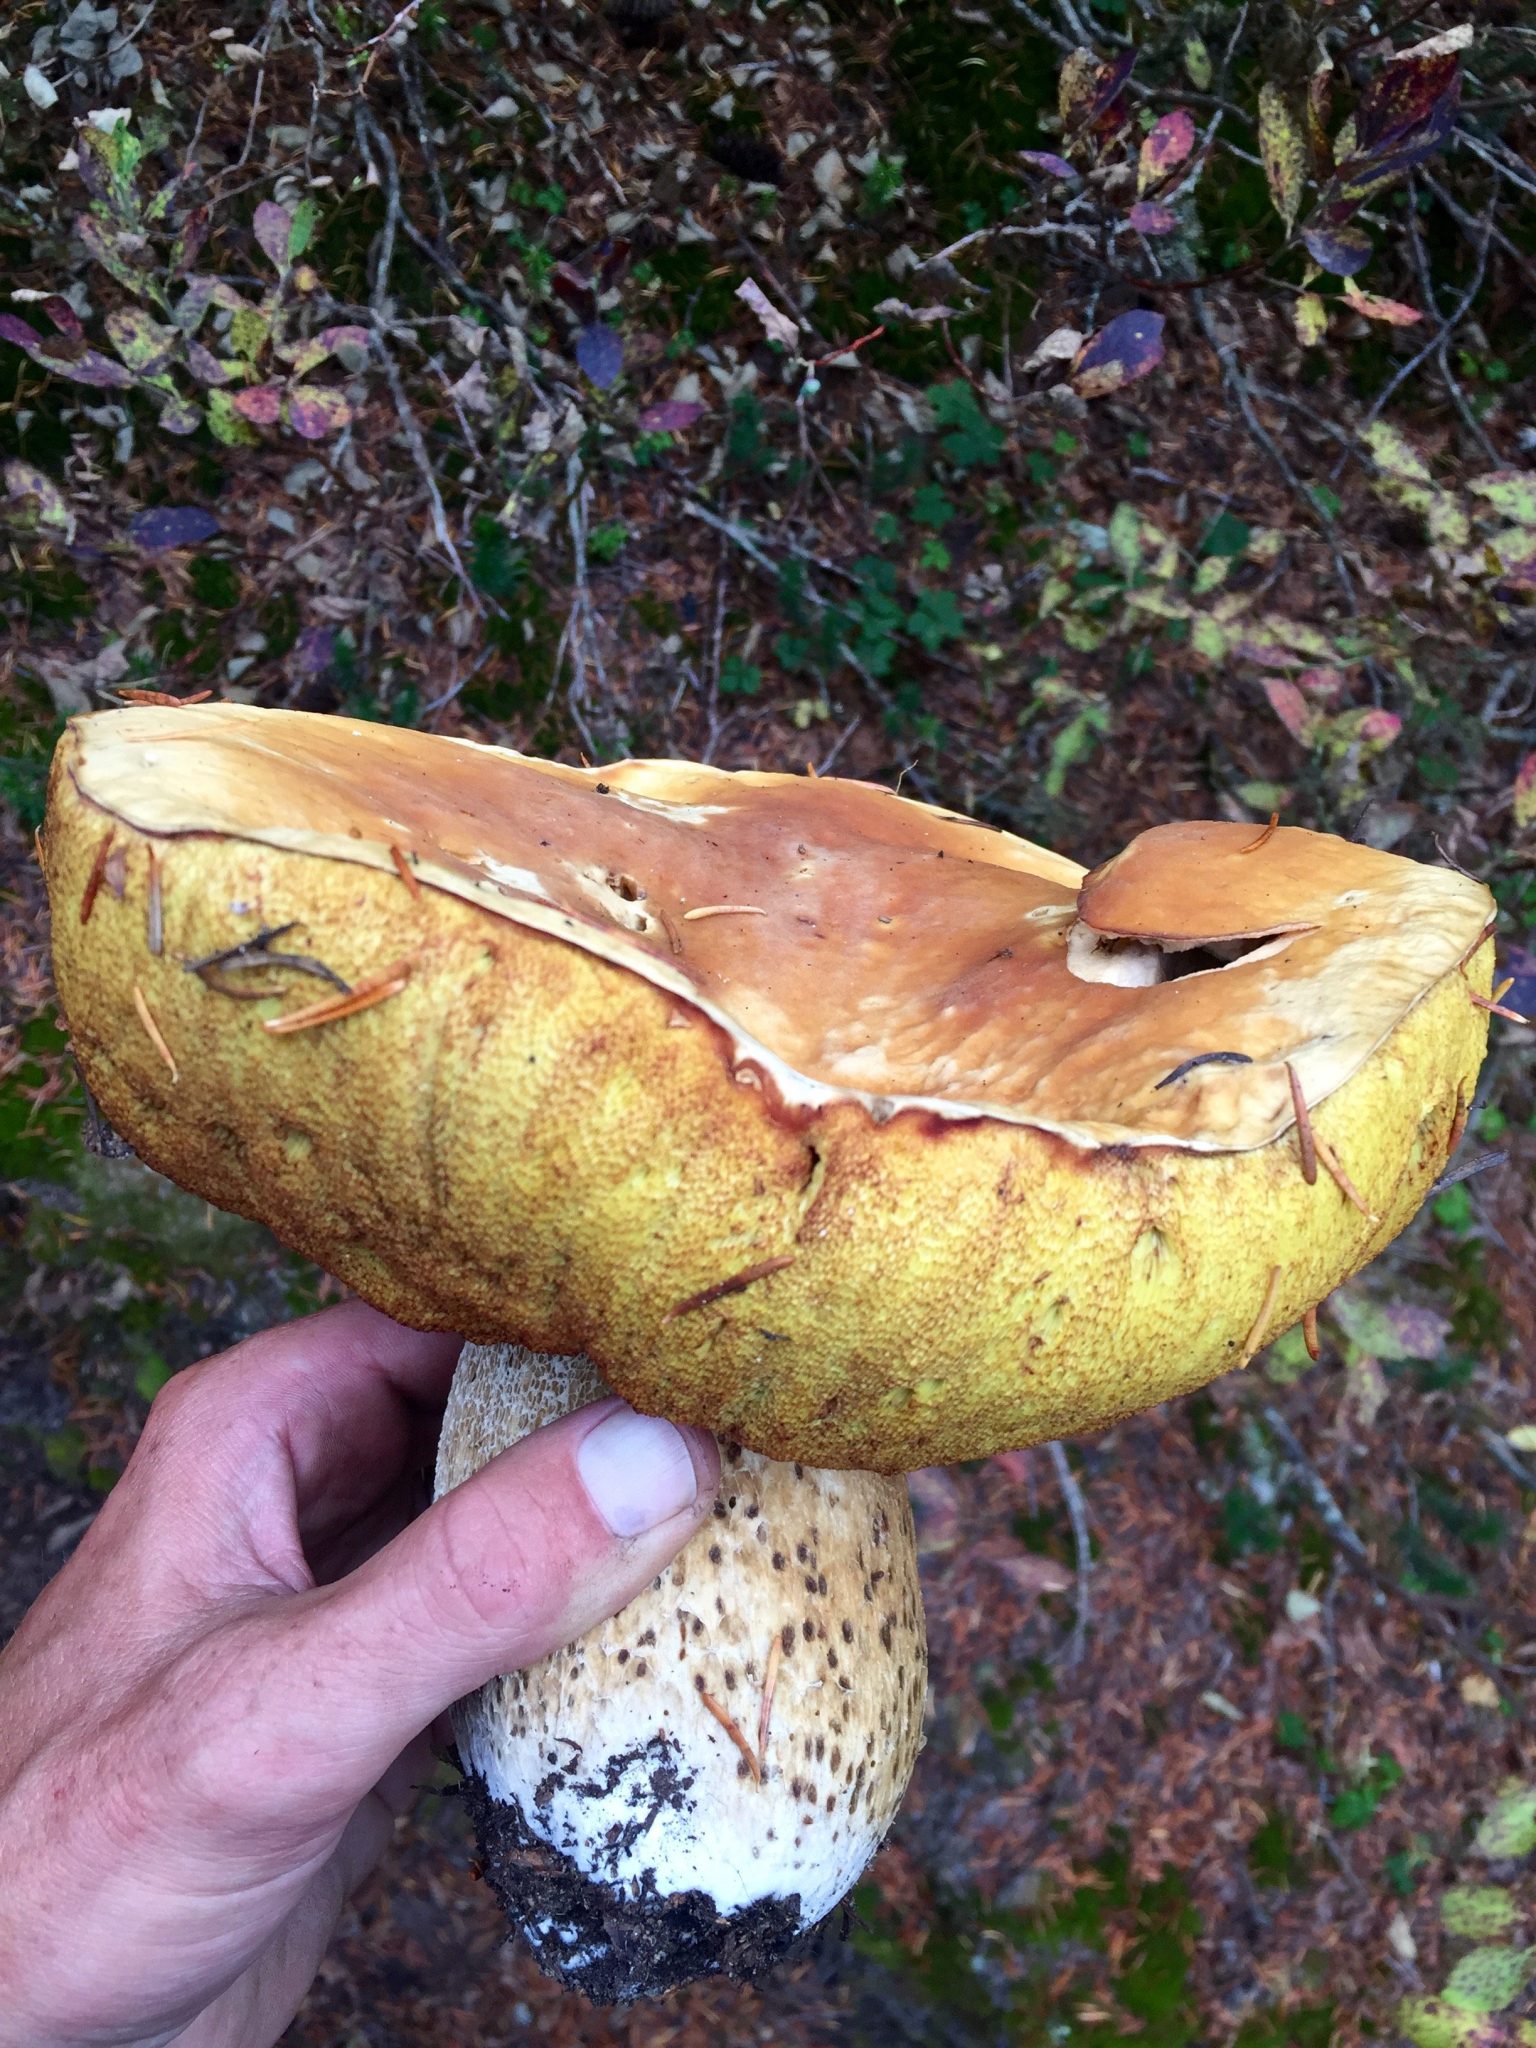 Mountain man holding a giant yellow mushroom